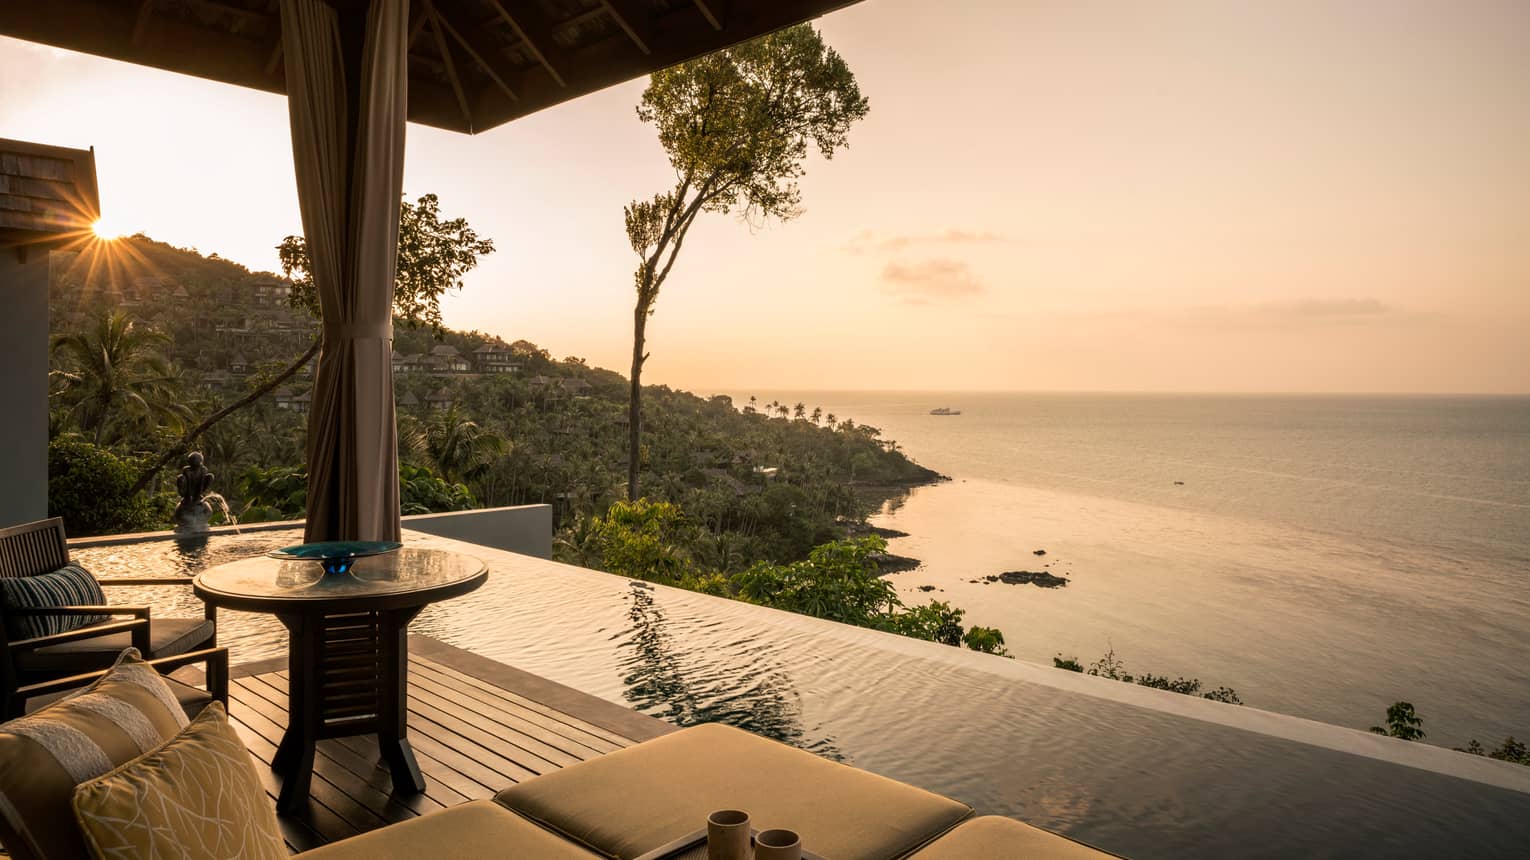 One-bedroom pool villa patio chair, infinity pool overlooking mountain, ocean at sunset